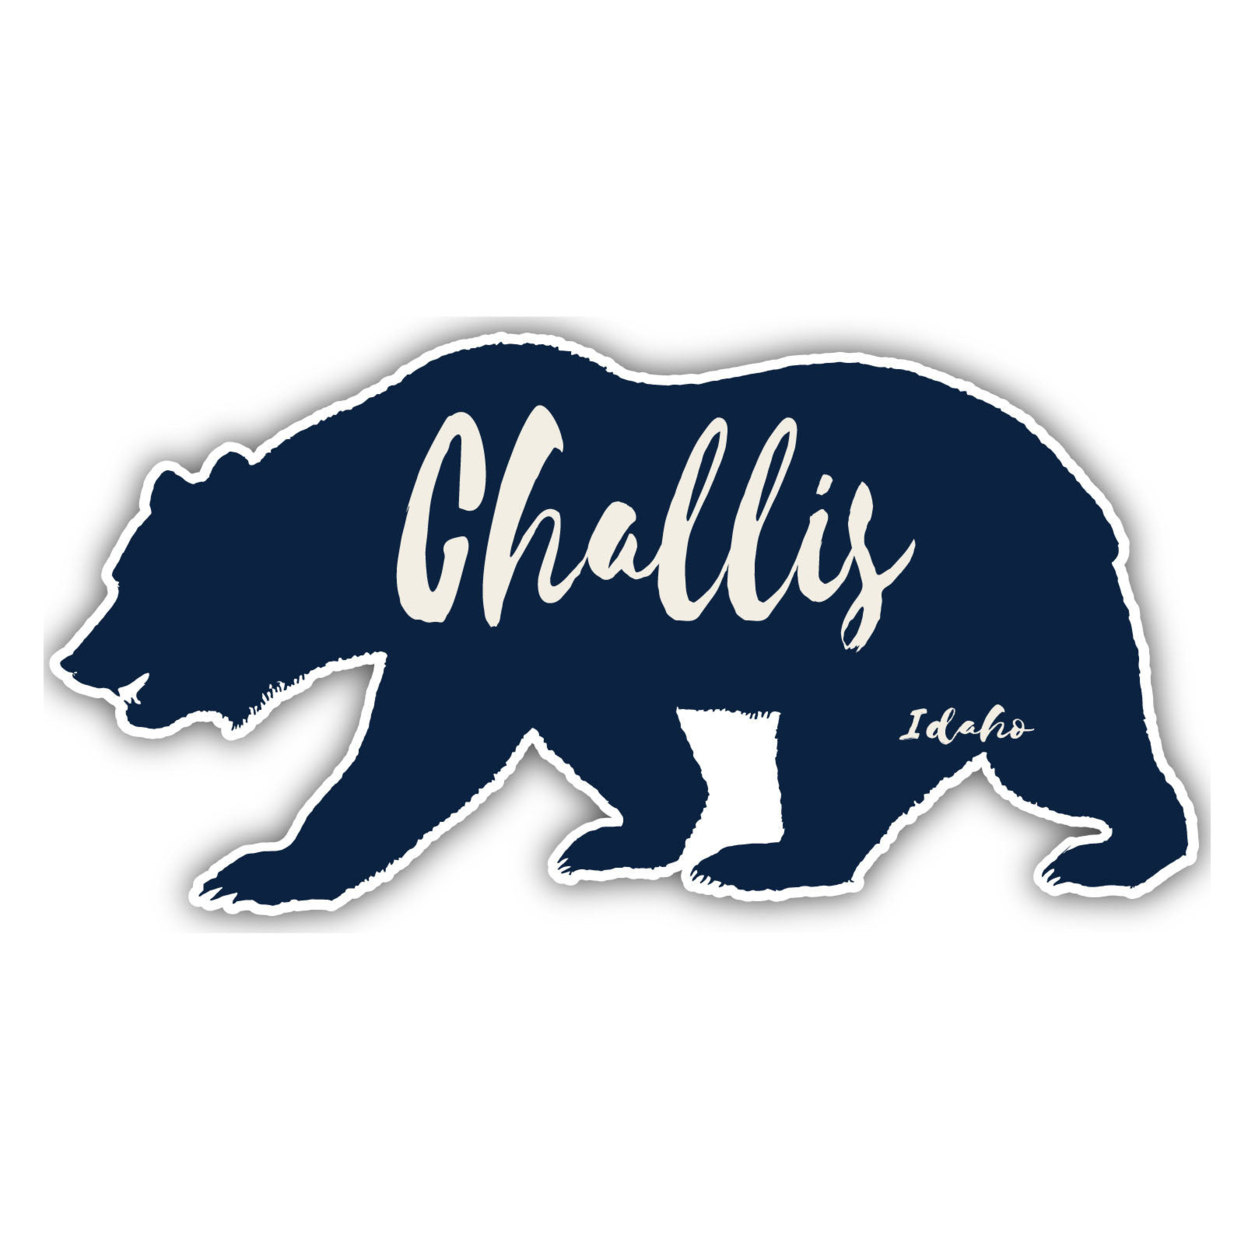 Challis Idaho Souvenir Decorative Stickers (Choose Theme And Size) - Single Unit, 2-Inch, Adventures Awaits